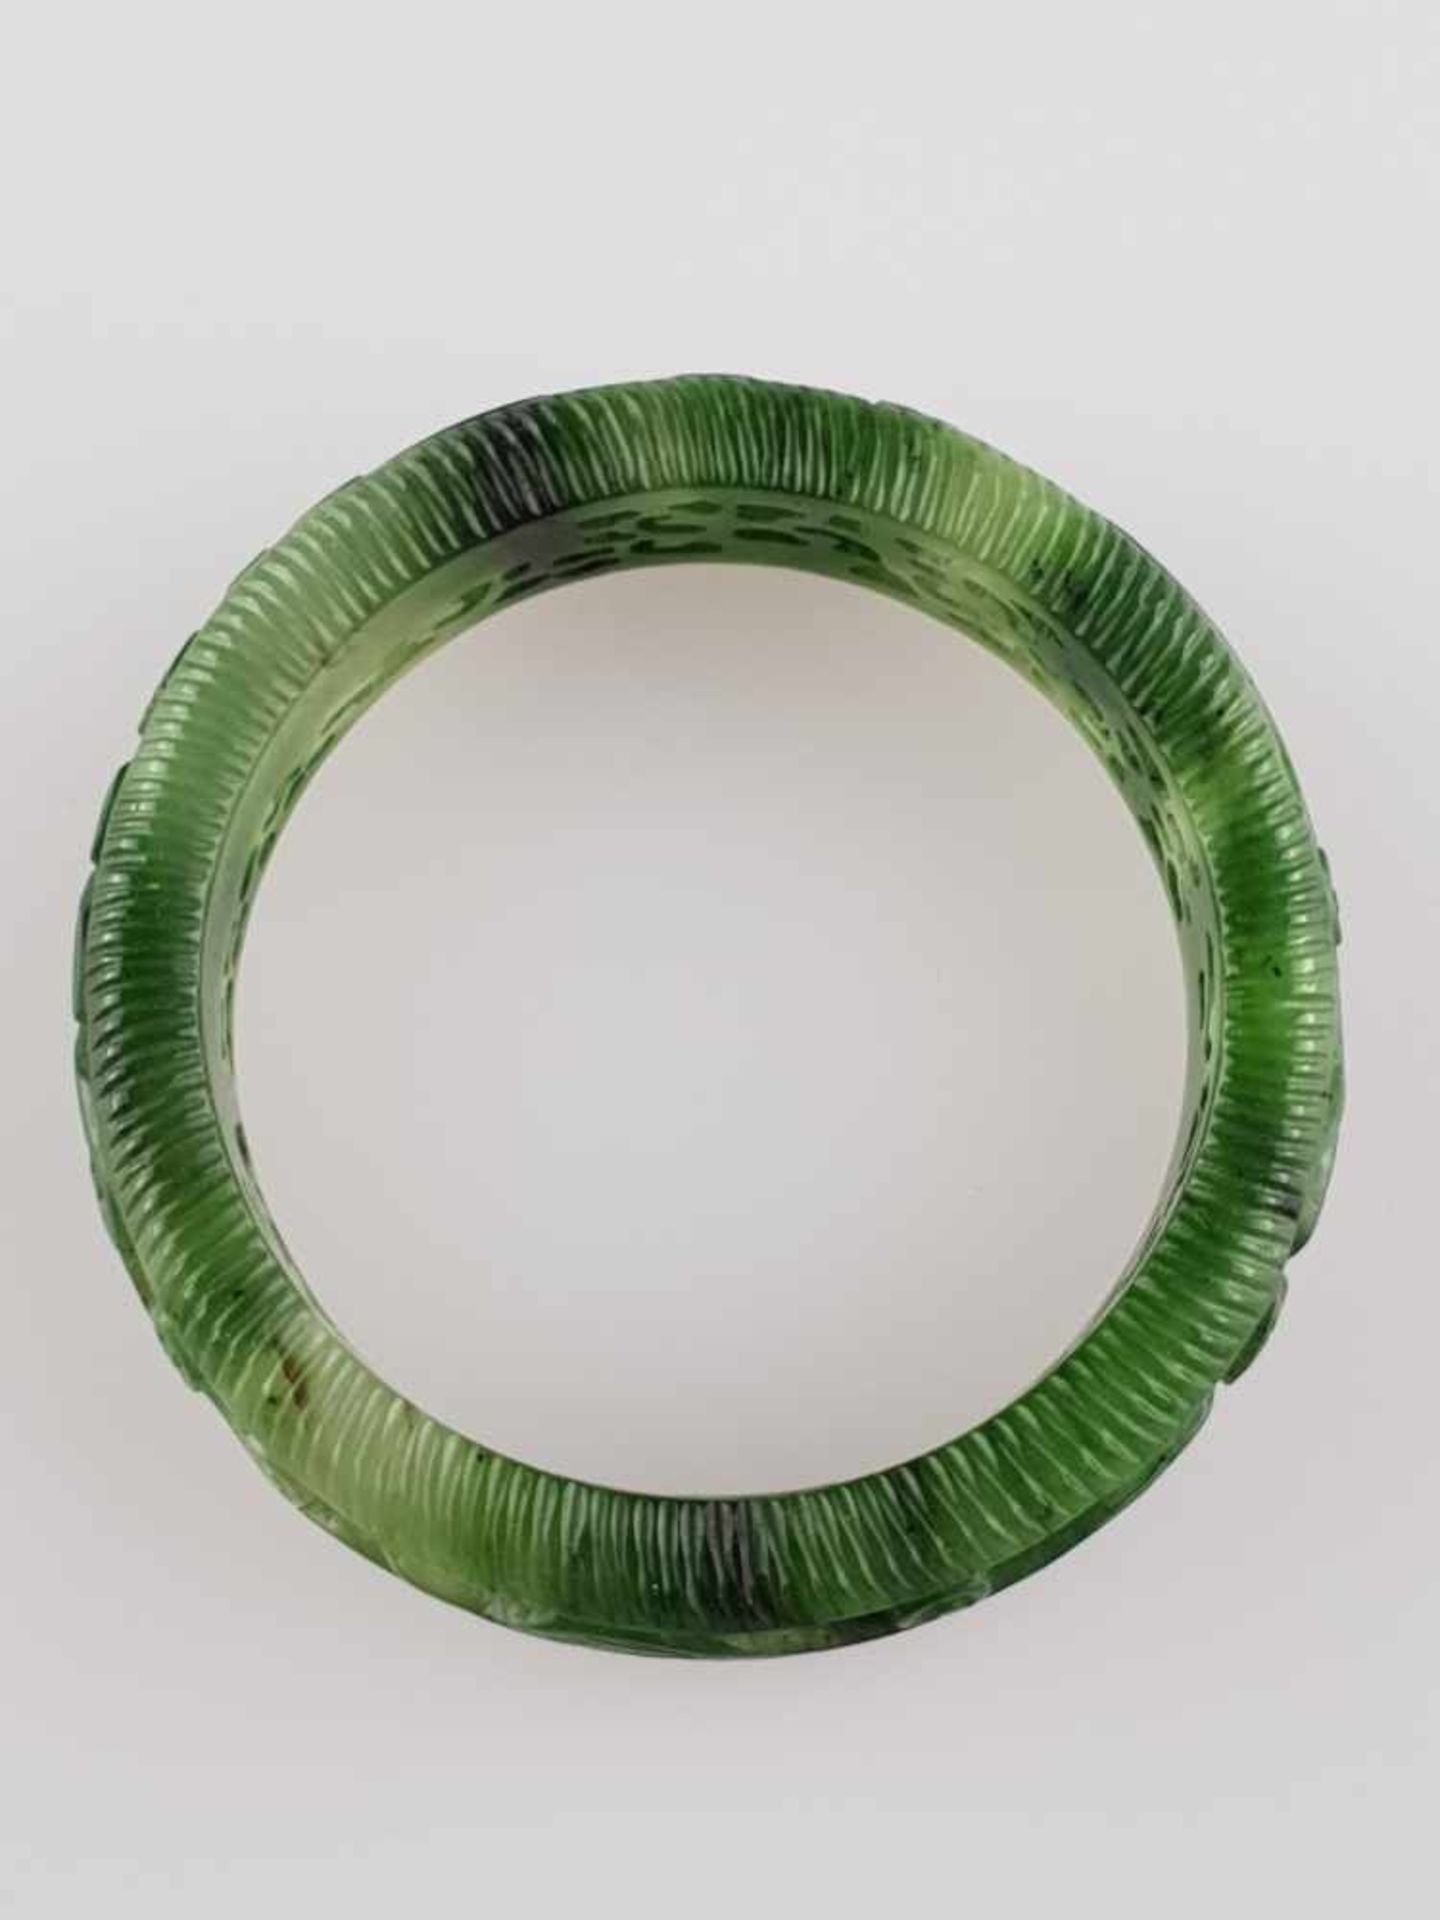 Jadearmreif - China, spinatgrüne Jade, filigrane Durchbrucharbeit mit Rankenmotiven, fein poliert, - Bild 2 aus 4